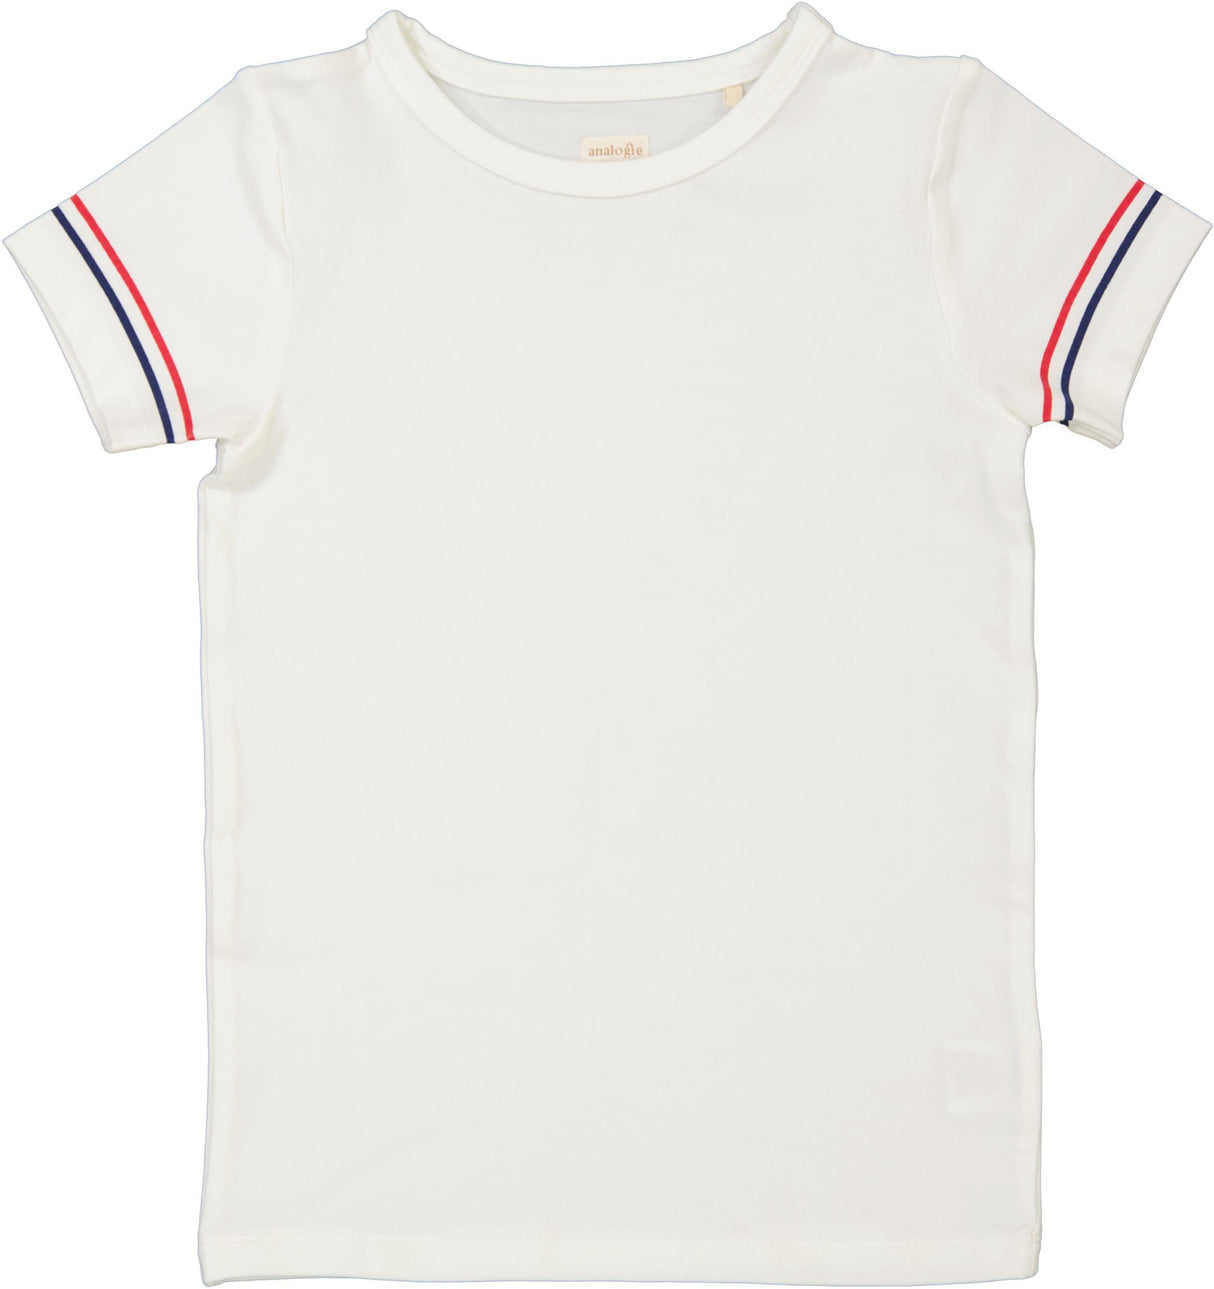 Analogie by Lil Legs Sunshine Denim Collection Boys Girls Short Sleeve T-shirt